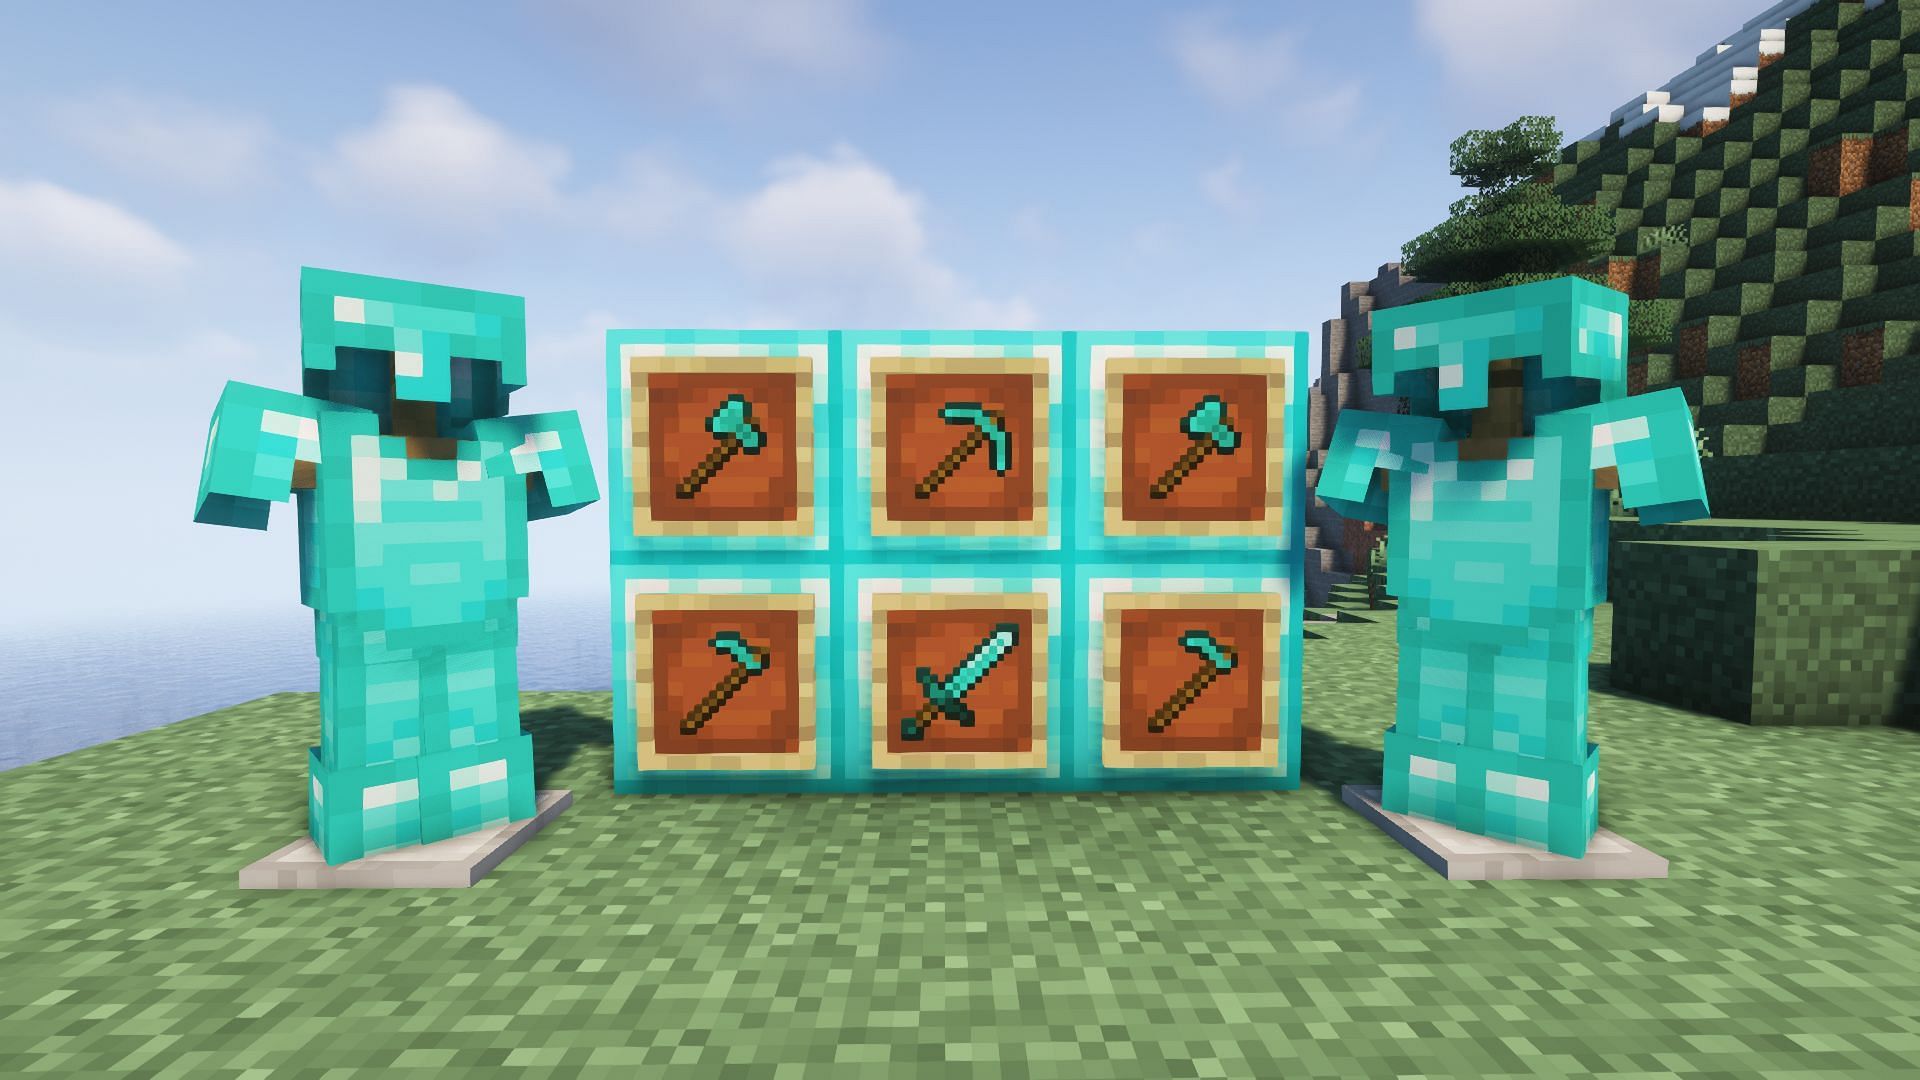 Diamond tools and armor (Image via Minecraft)